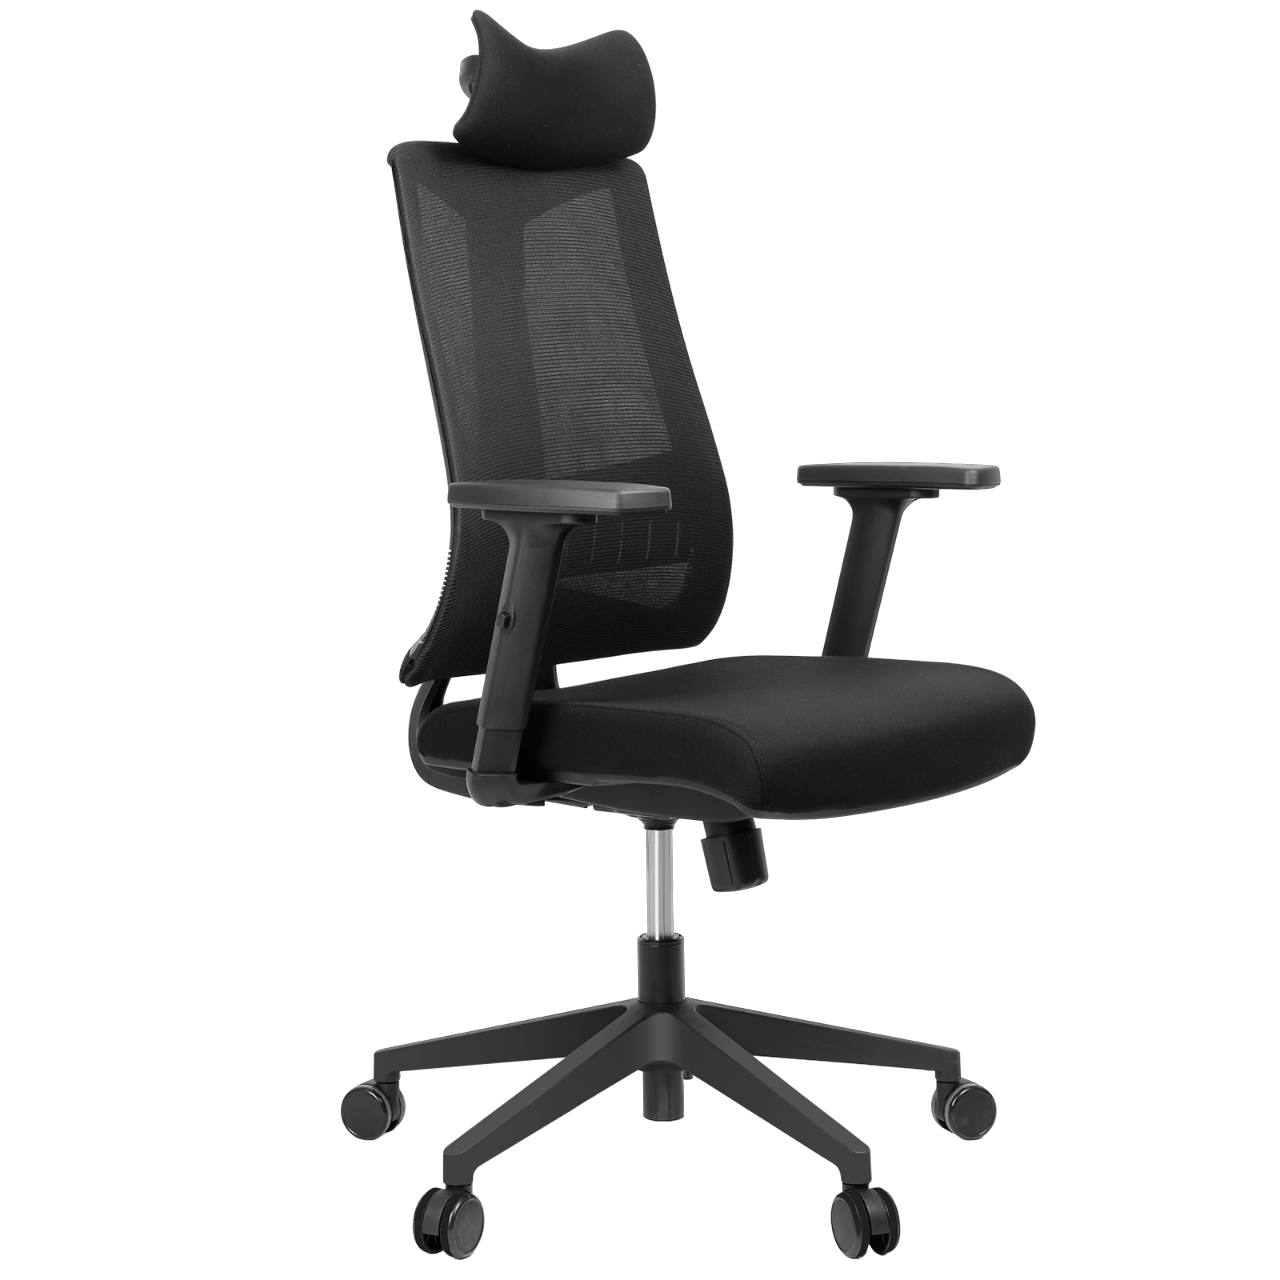 FOXSPORT chair 11C Gaming stuhl, schwarz